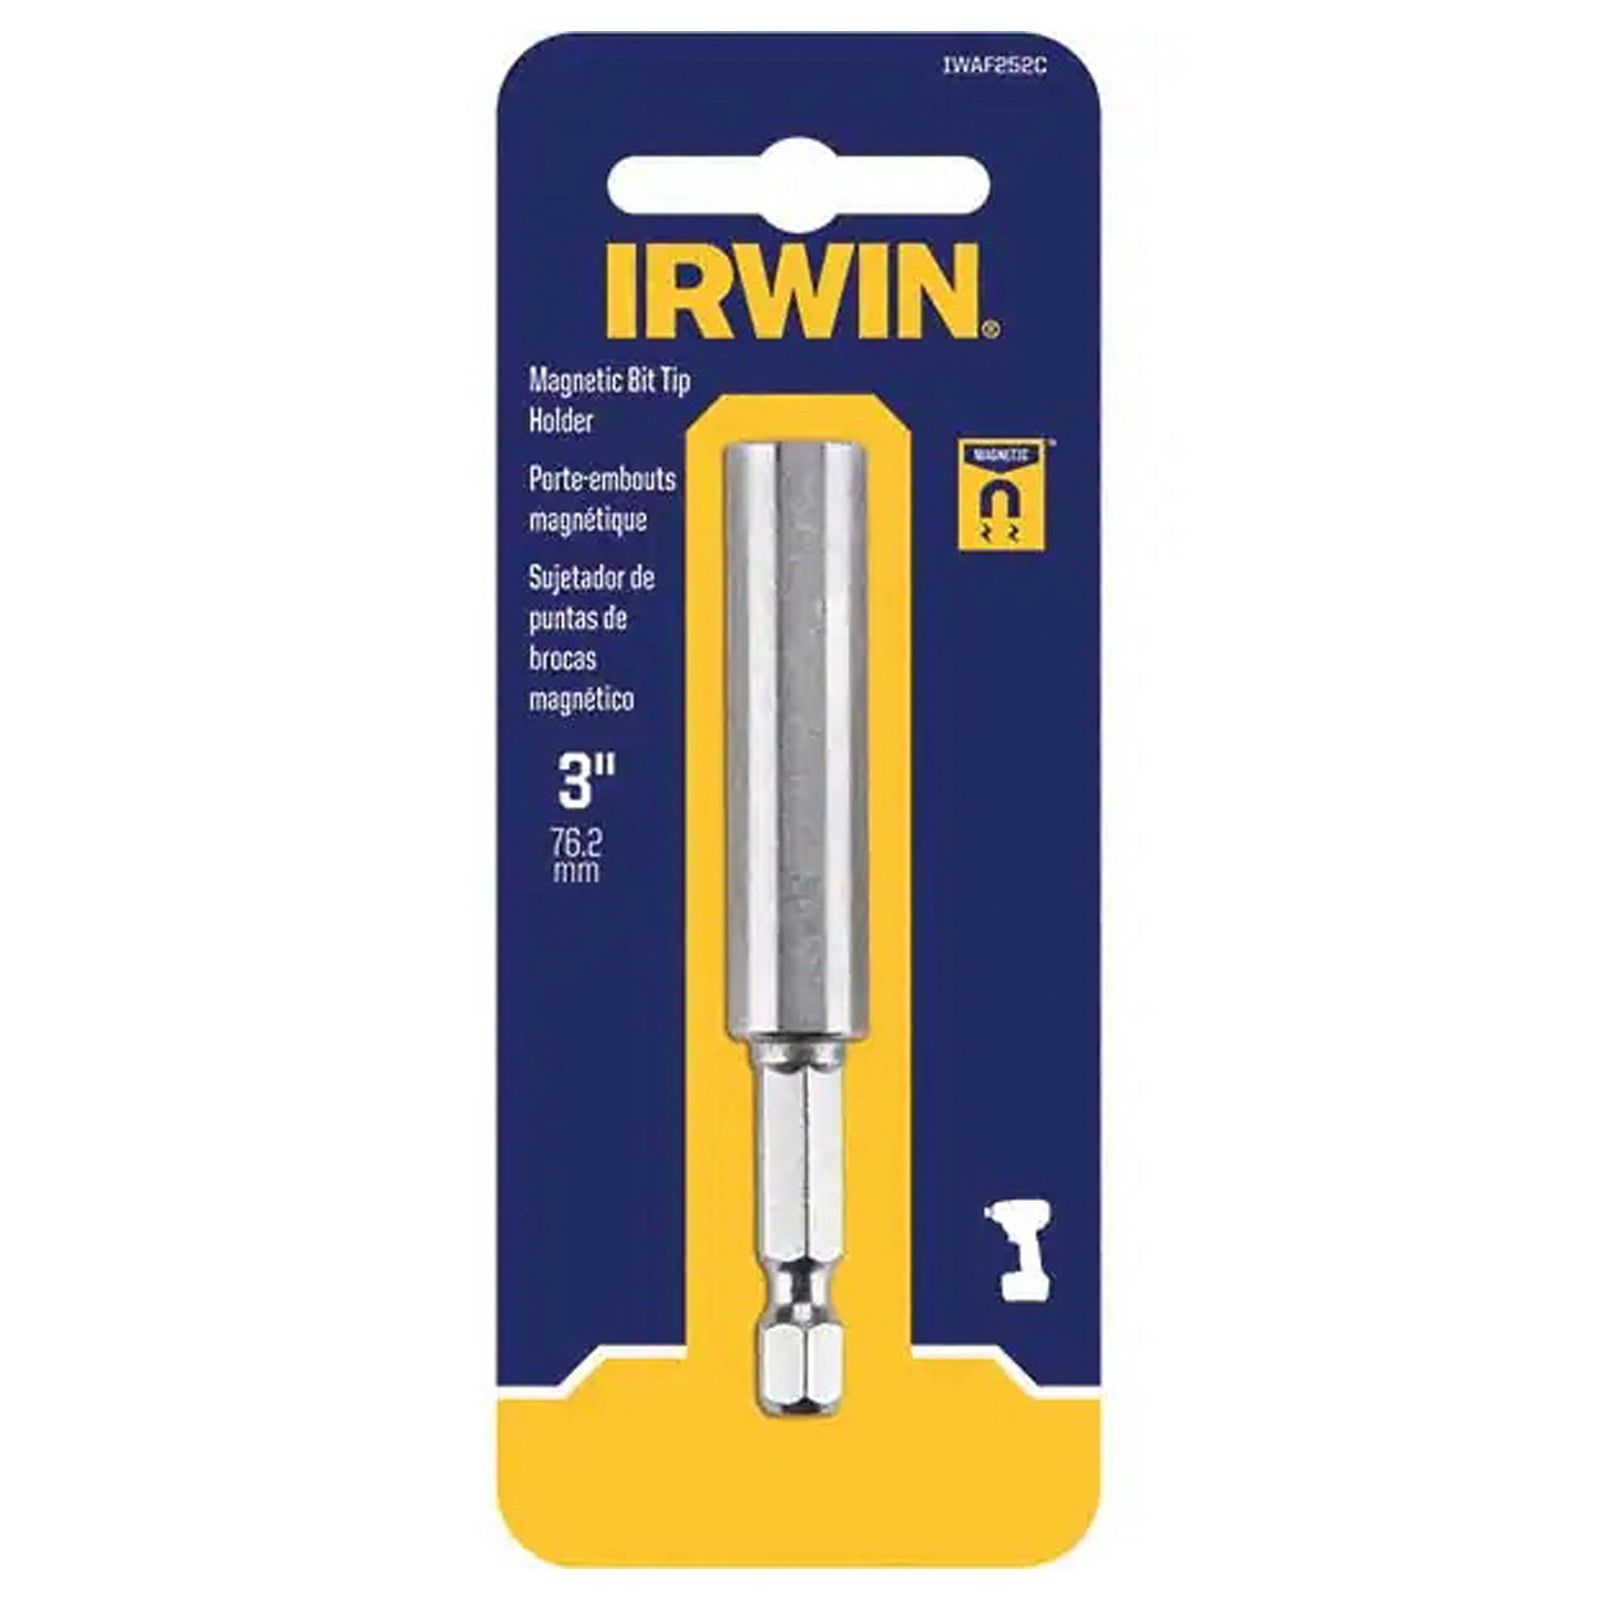 IRWIN Magnetic Bit Tip Holder (3")